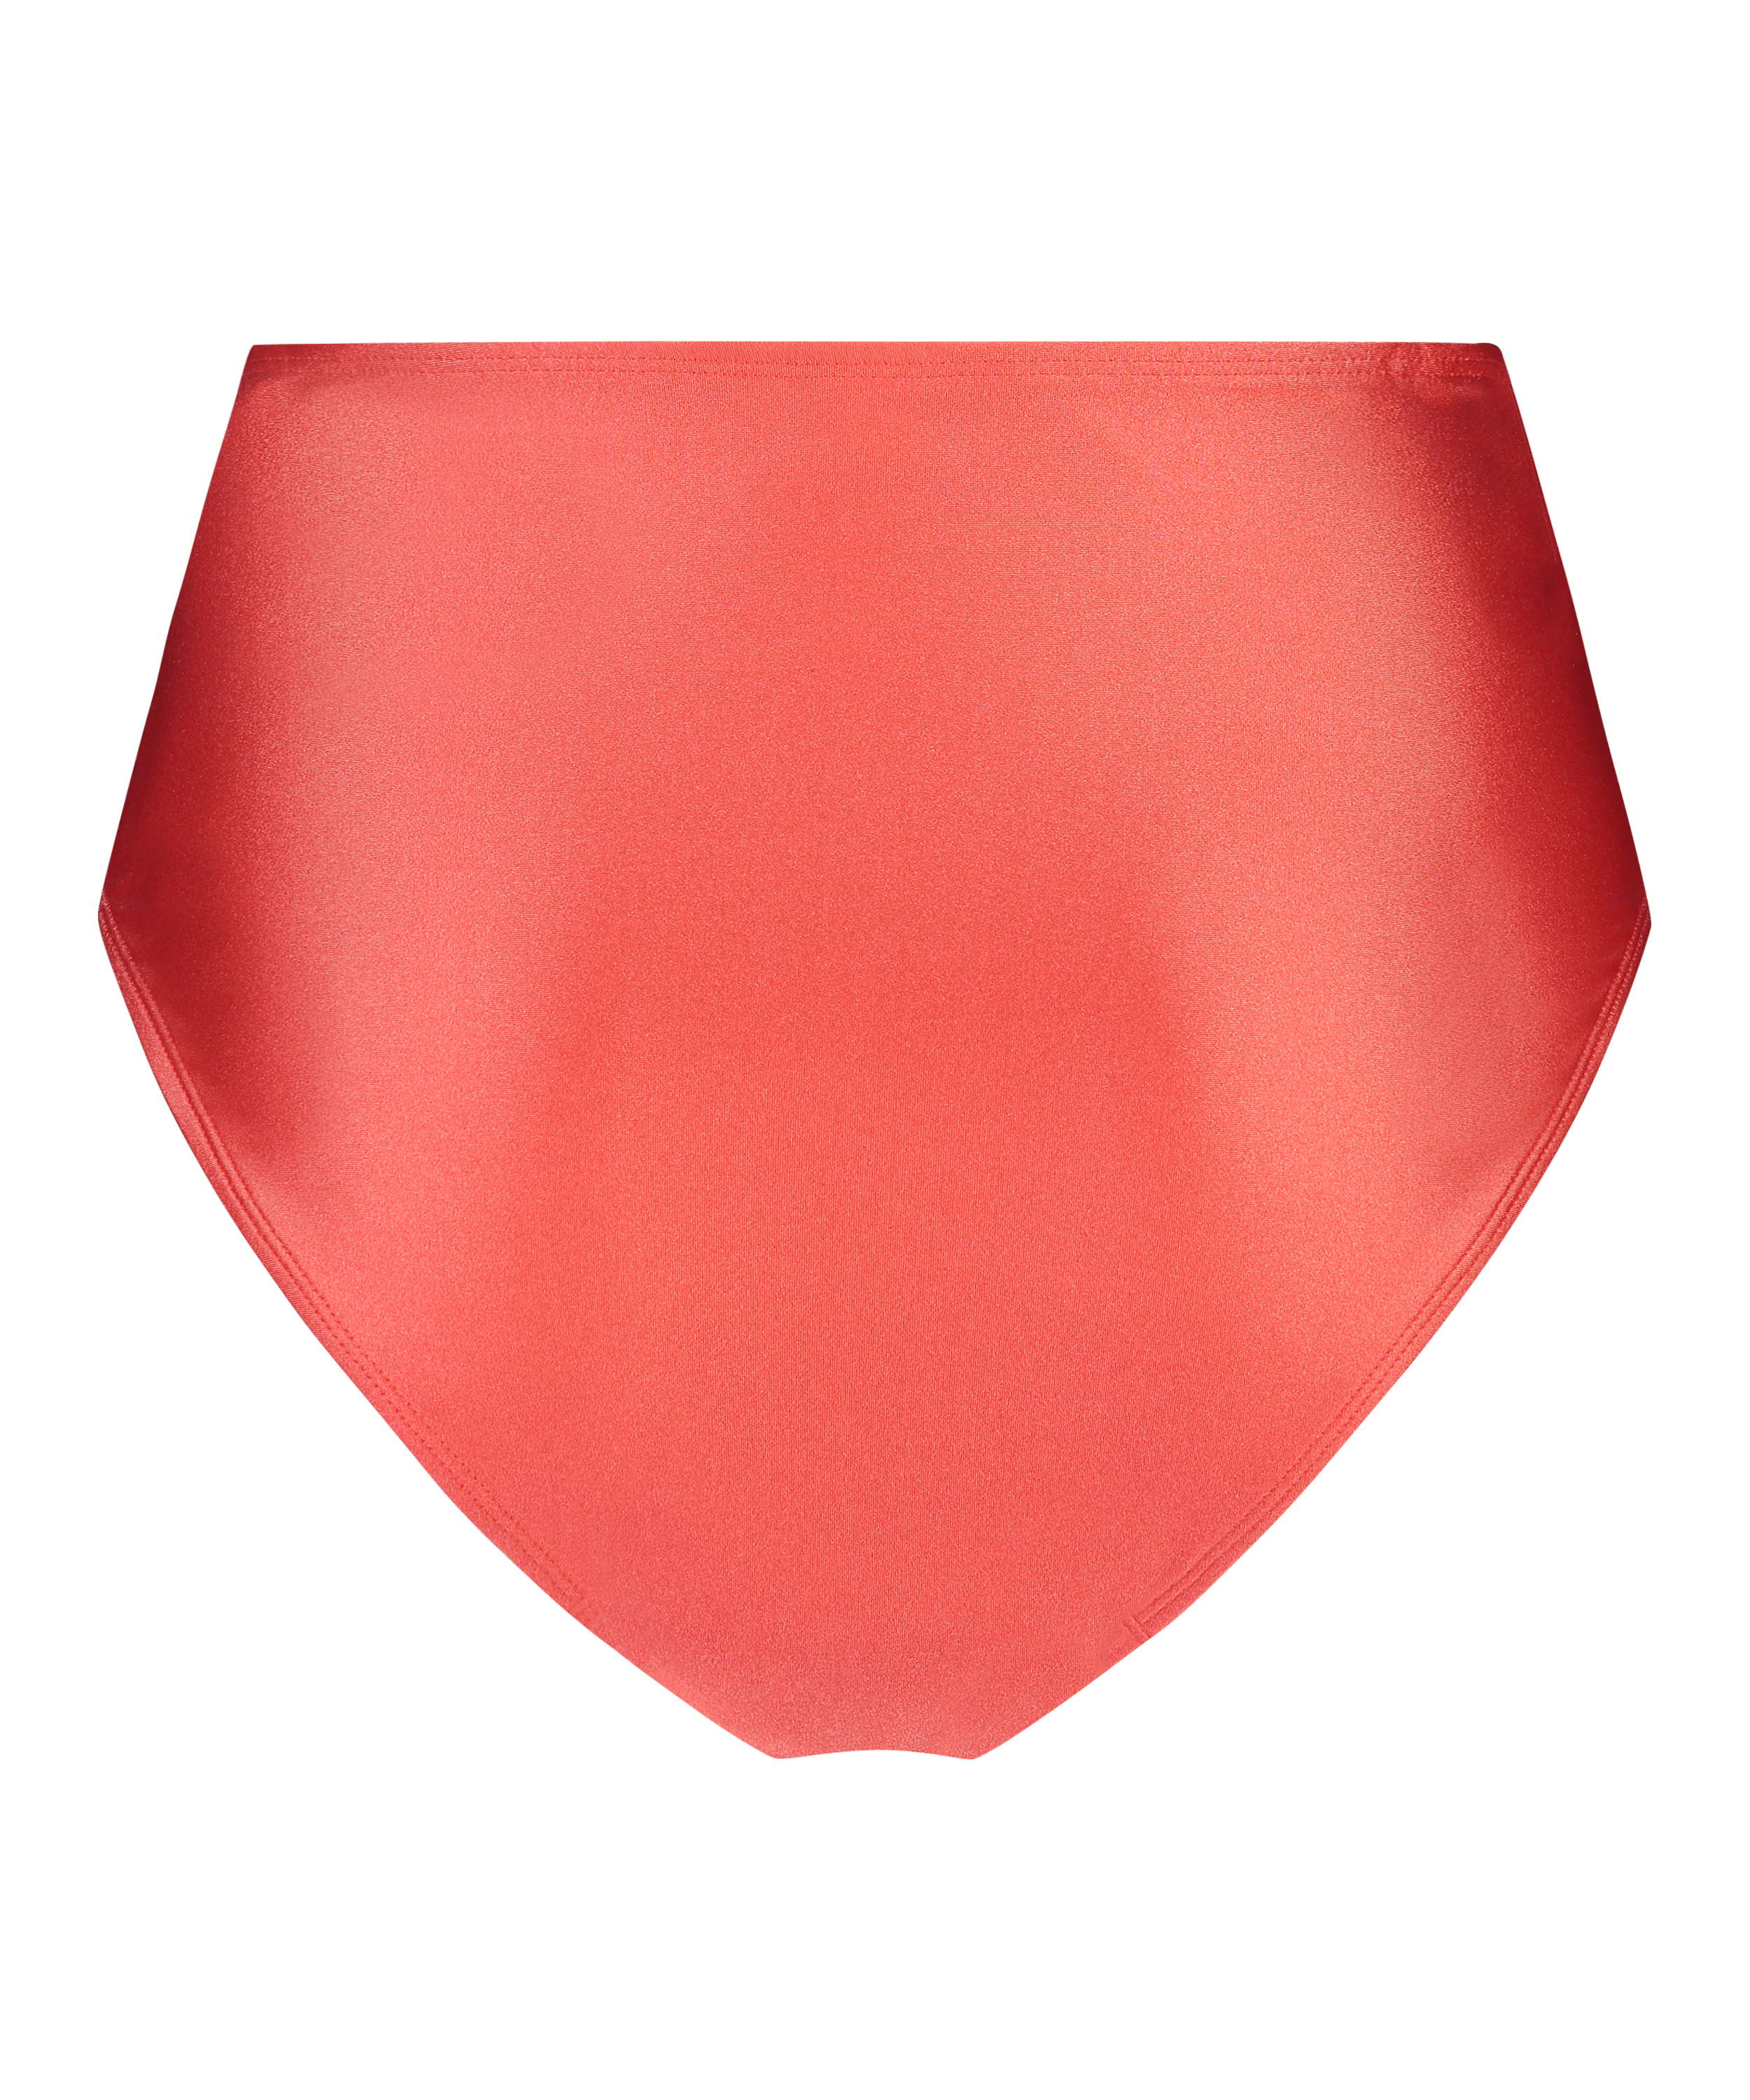 Rio Bikiniunderdel Luxe, röd, main